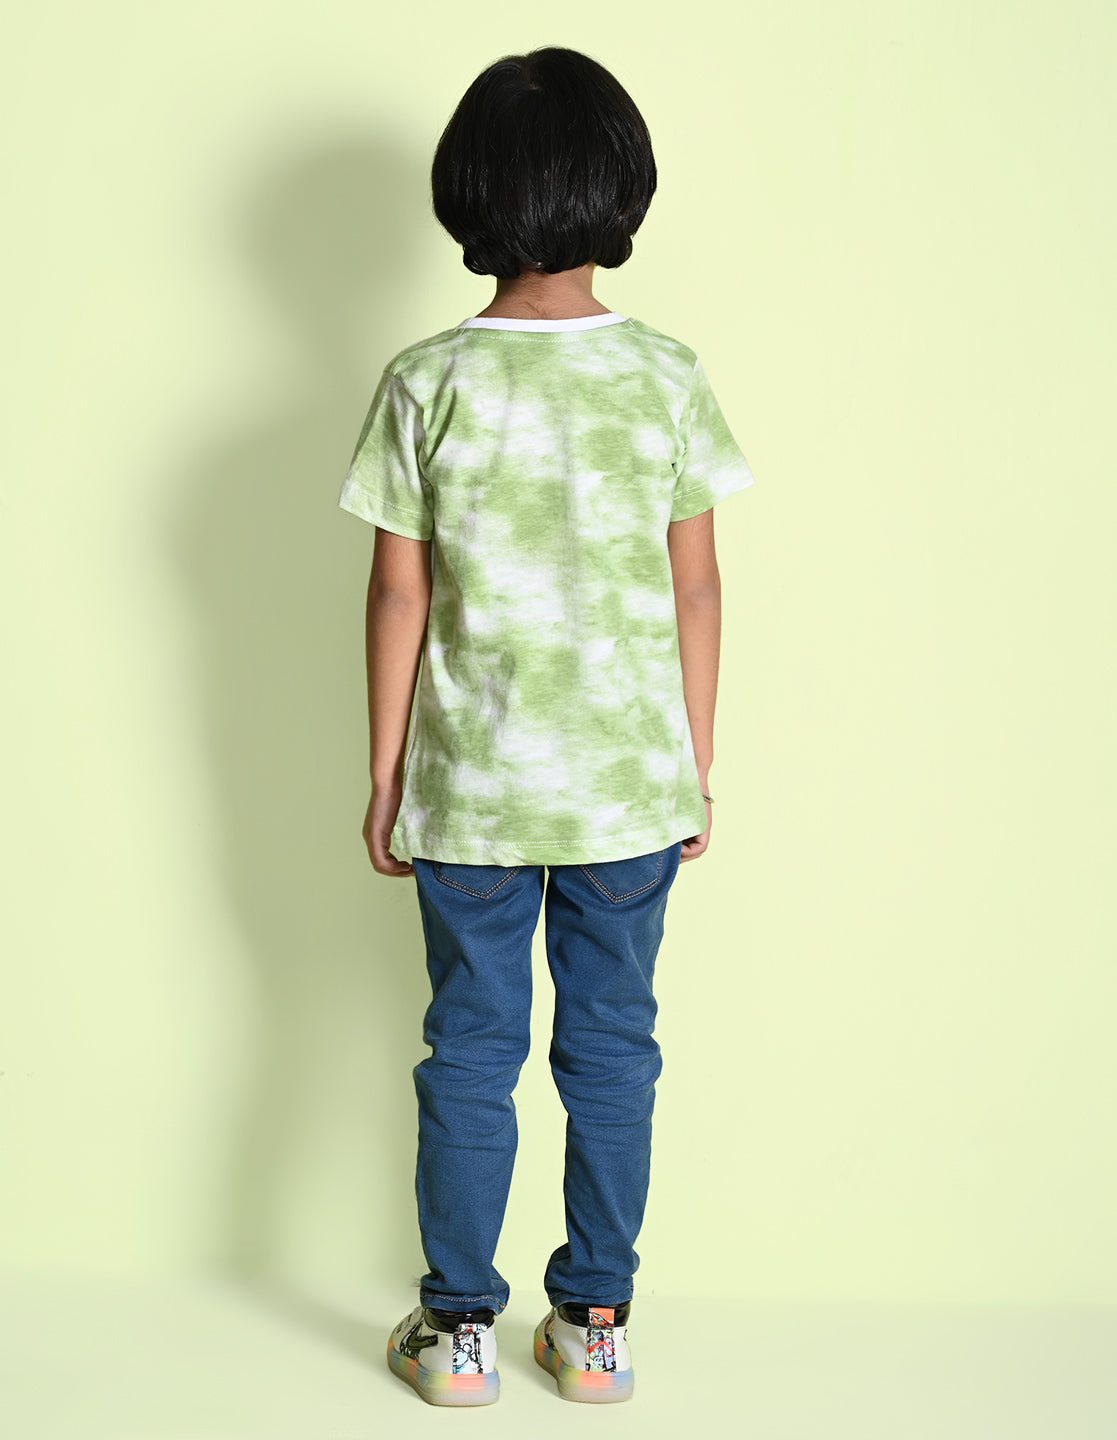 Nusyl boys surf printed green tie & dye t-shirt